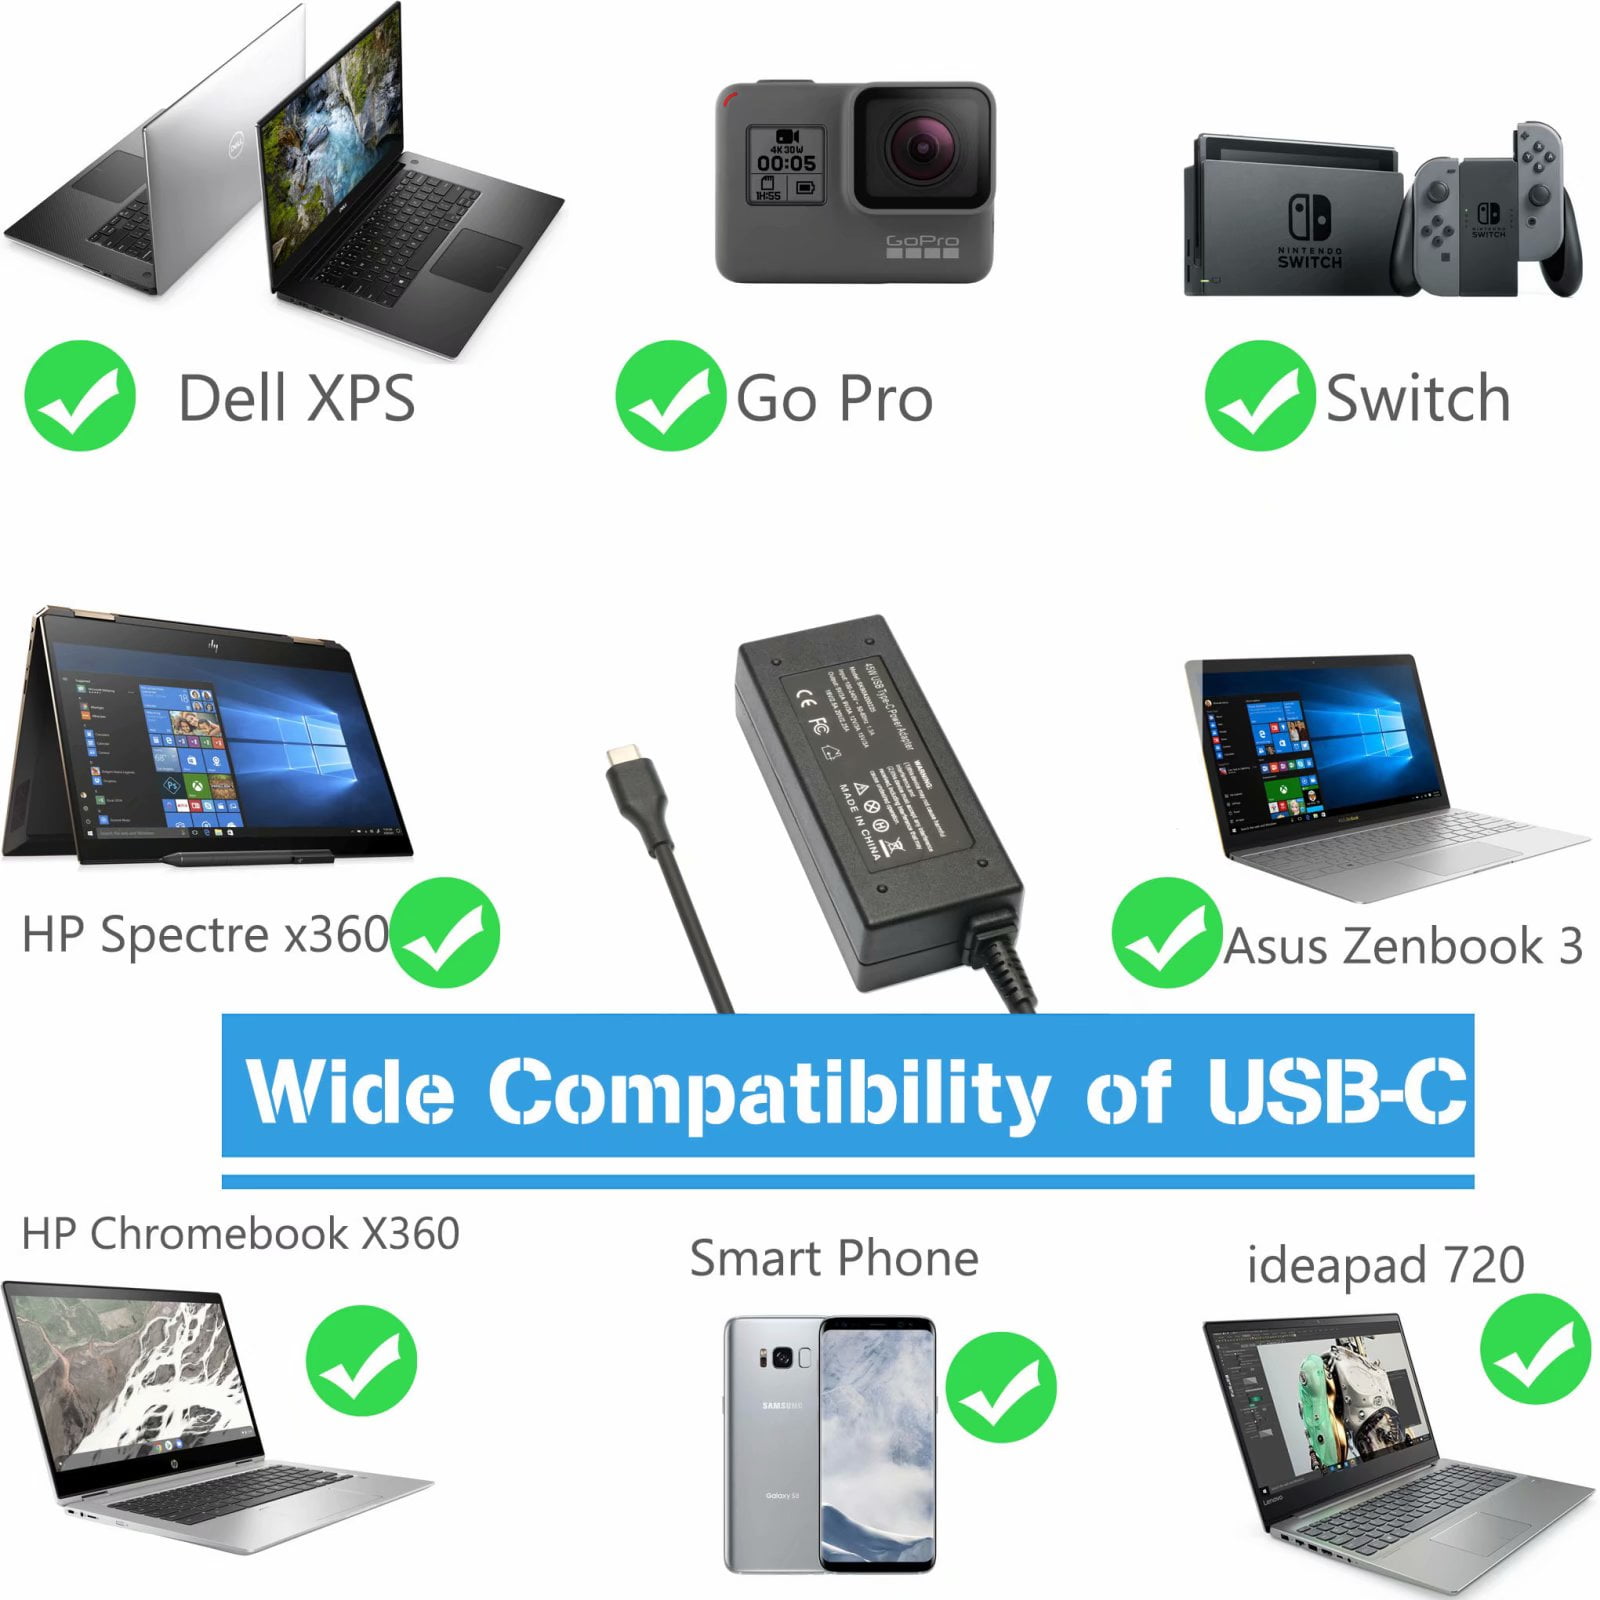 USB C Quick Charger, Type C Adapter Power Cord Asus Chromebook C302 C302C C302CA ZenBook Flip , Dell XPS, Thinkpad, Pixel Galaxy S10, LG, Nintendo switch Walmart.com